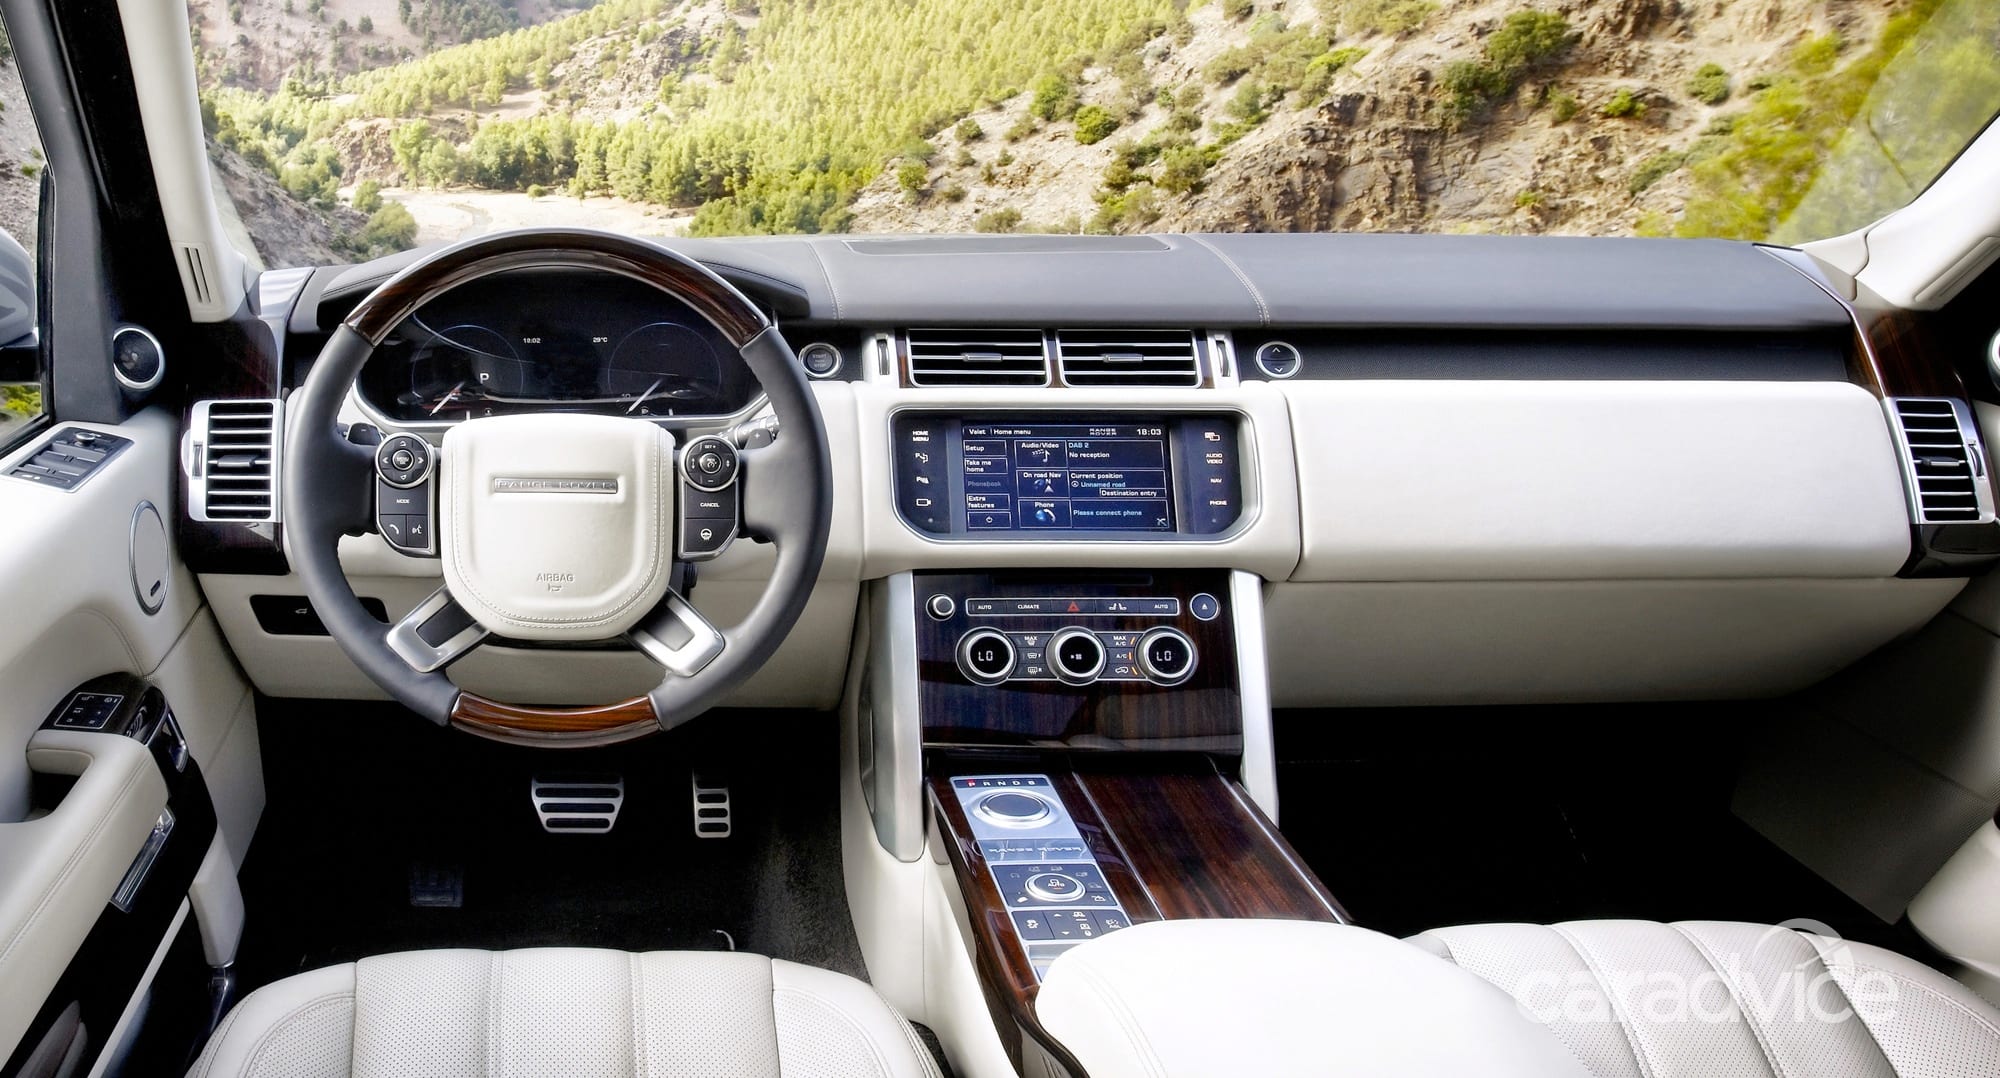 Range Rover Hybrid to achieve 6.3L/100km CarAdvice